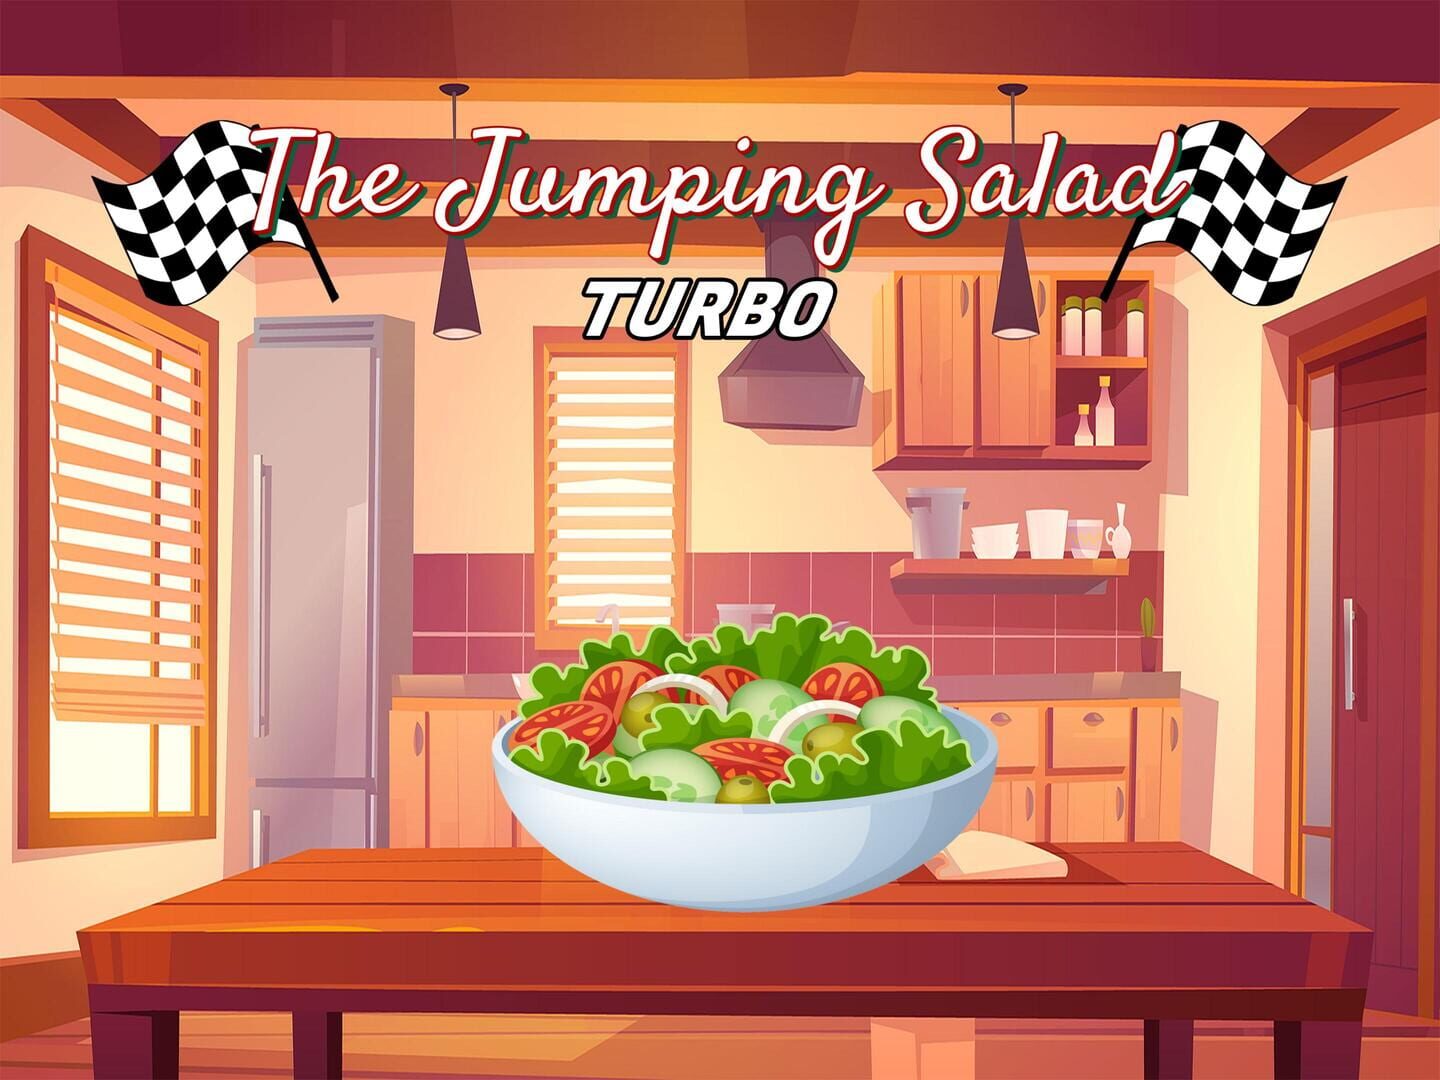 Arte - The Jumping Salad: Turbo